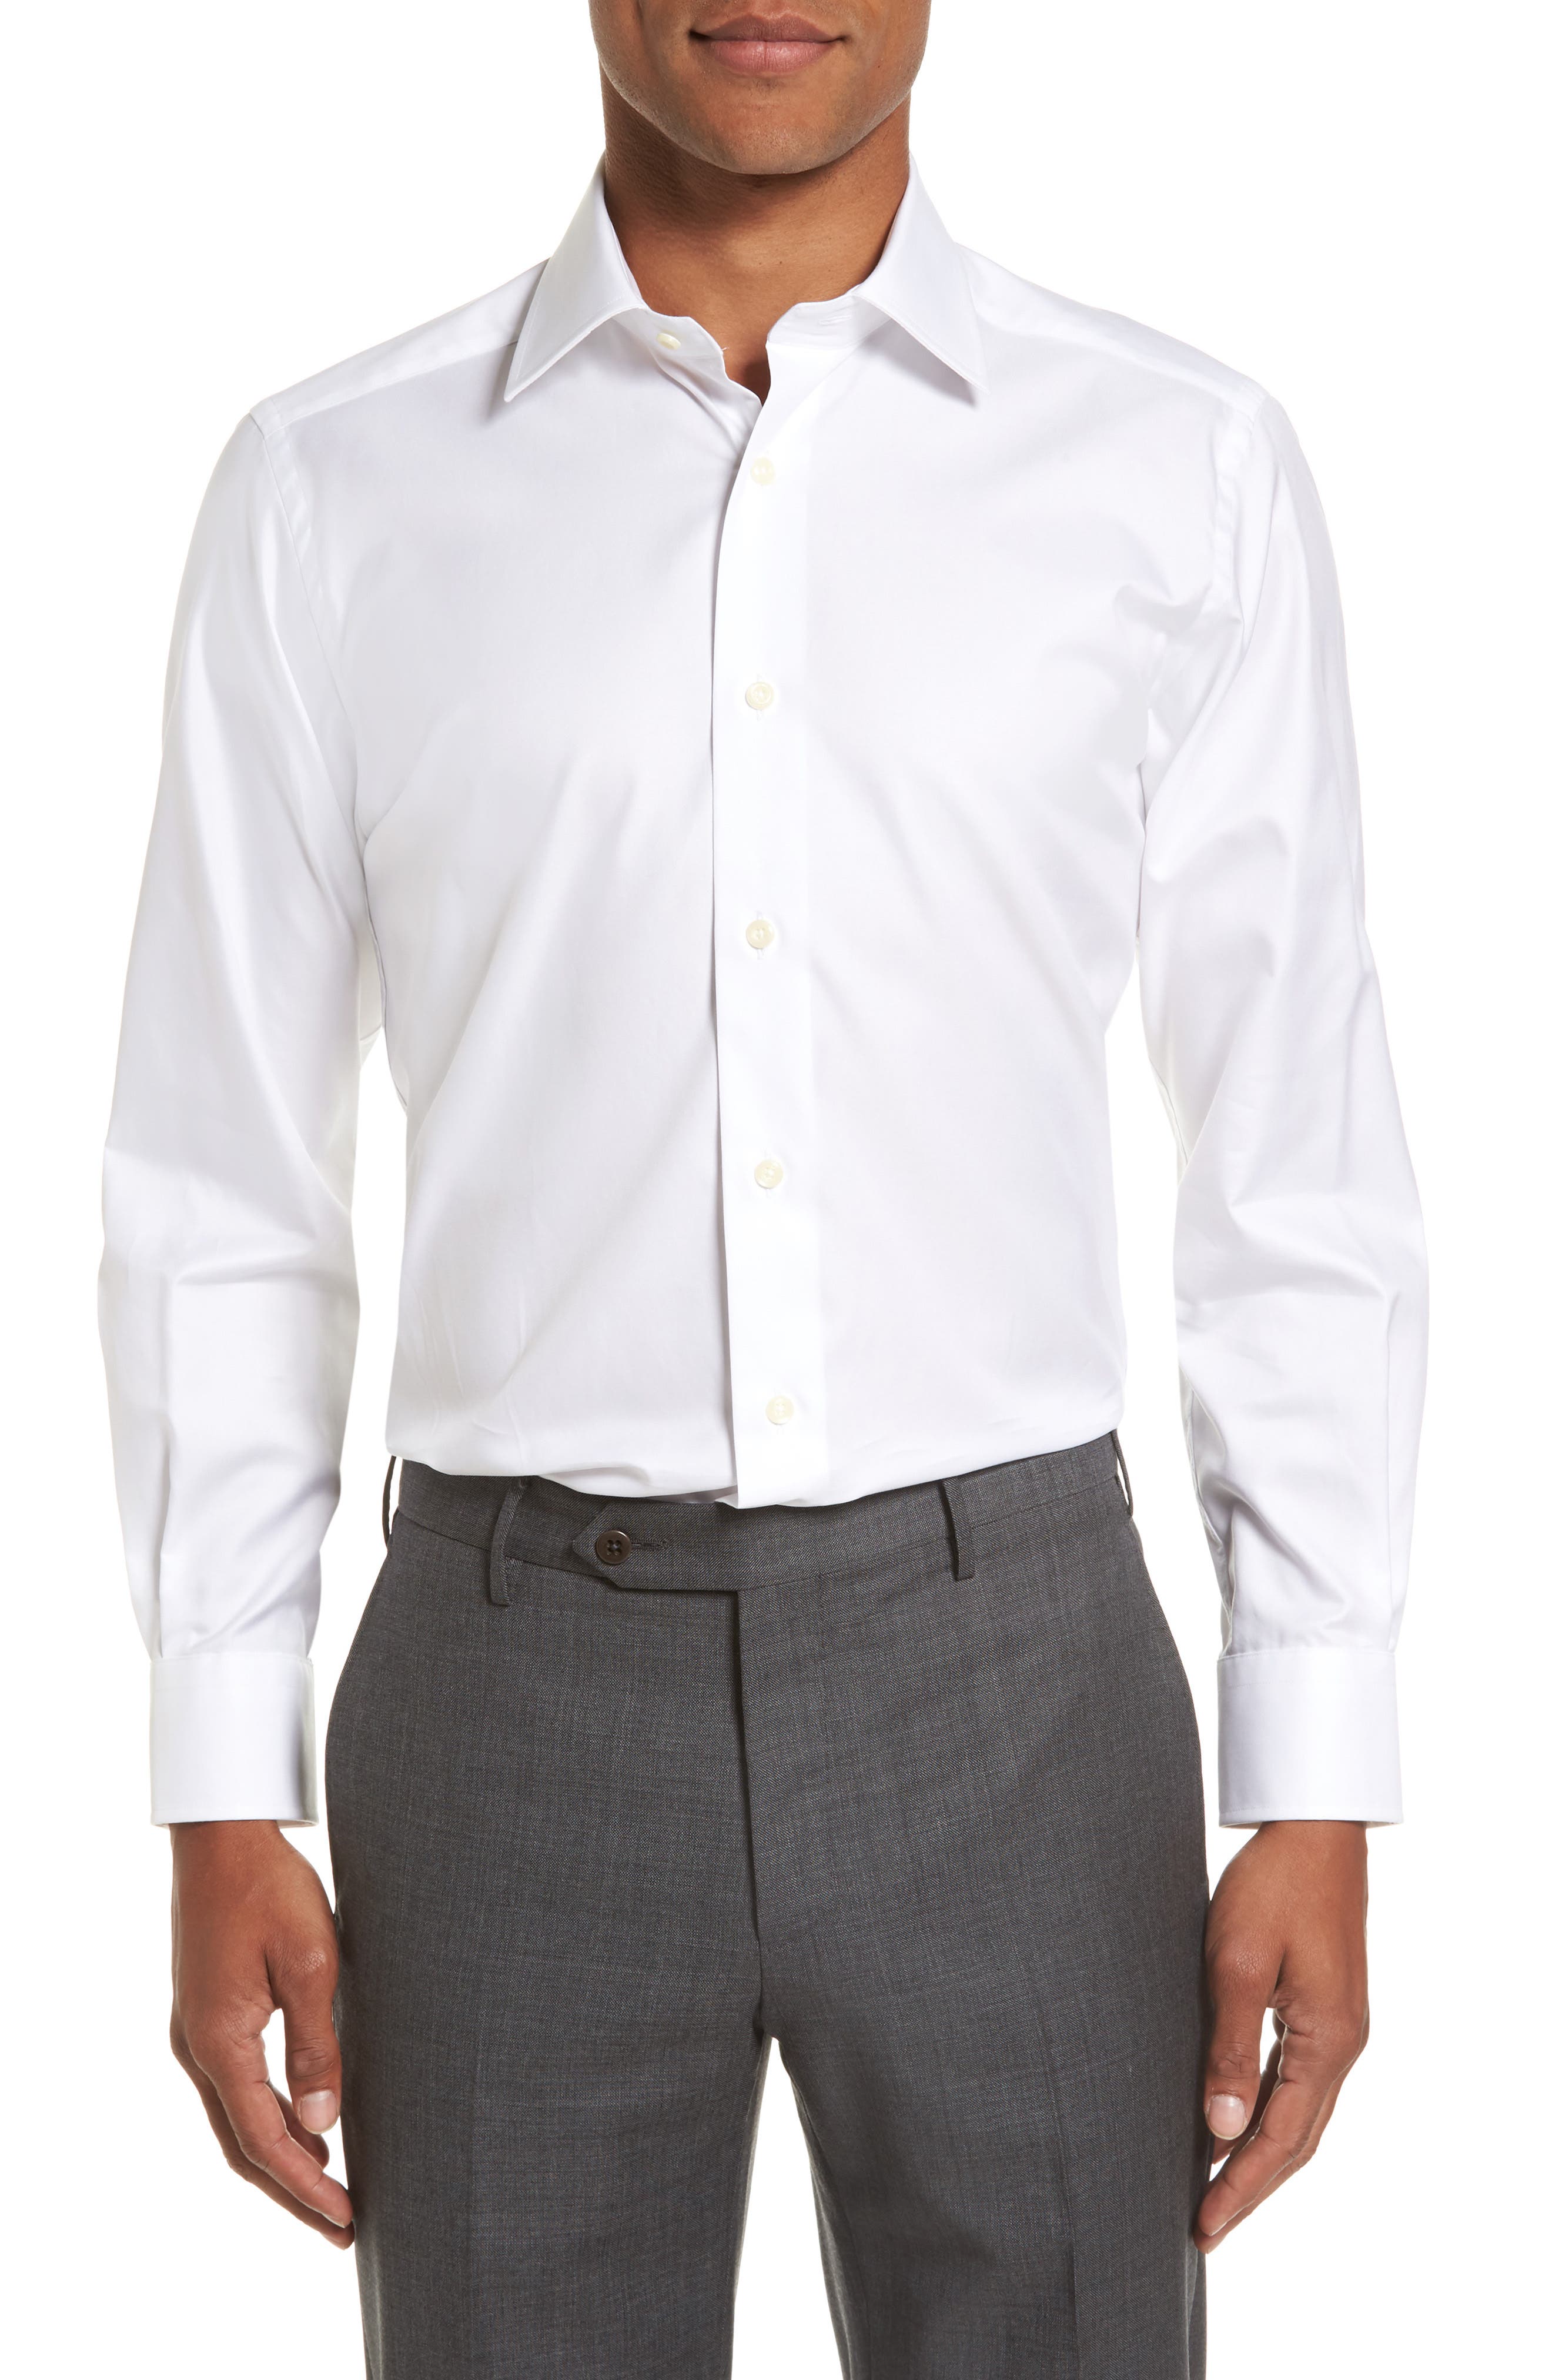 DAVID DONAHUE Slim Fit Medallion Dress Shirt Spread collar 15.5X34/35 $145 NWT